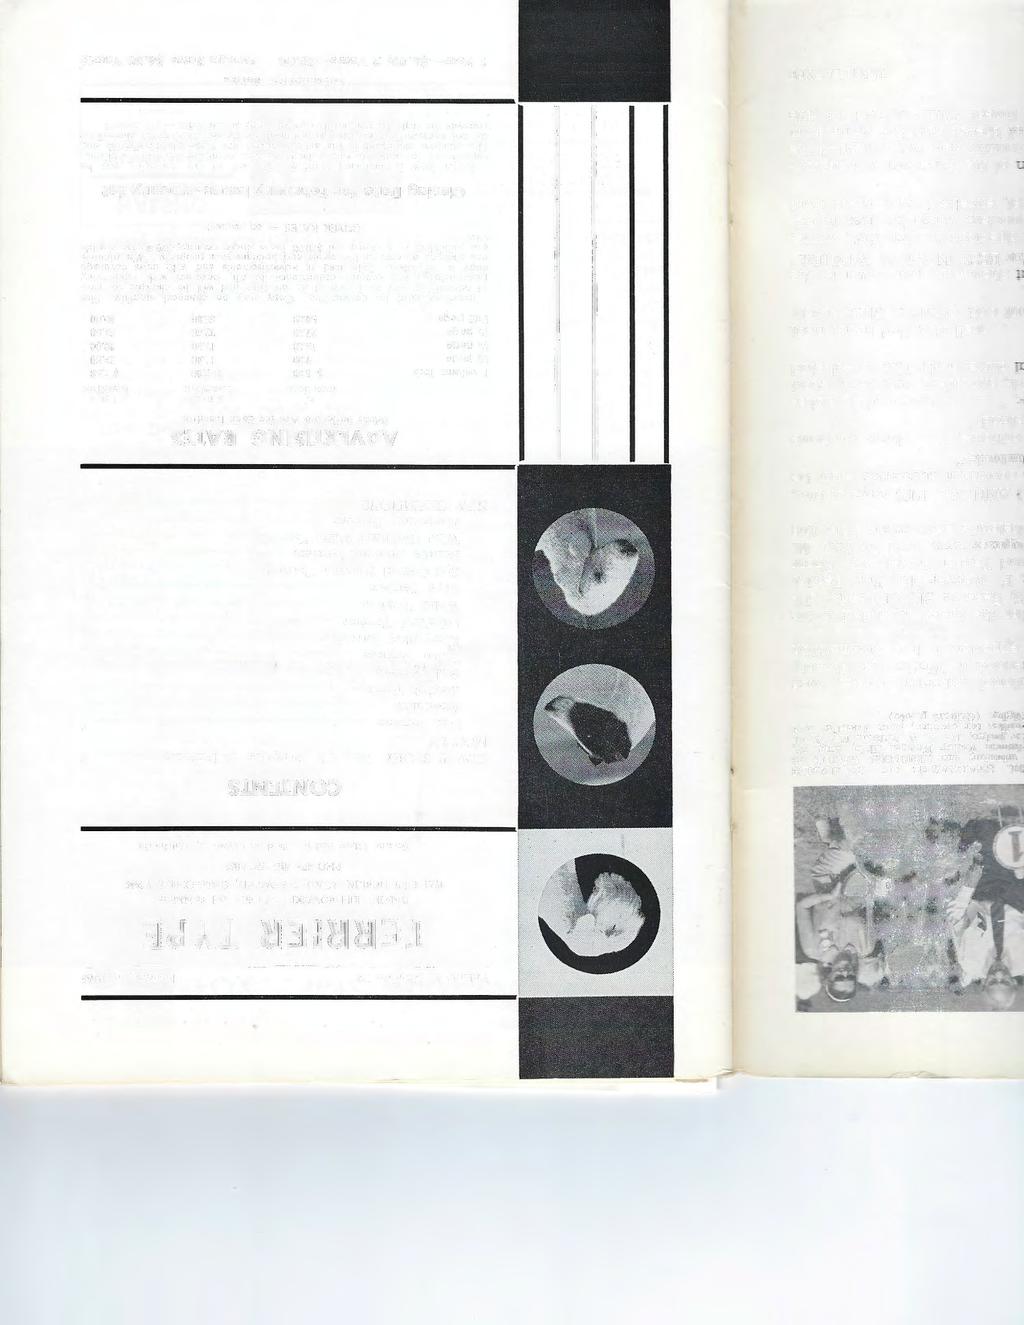 Volume V, Number 12 December, 1966 DANIEL KIEDROWSKI - Editor and Publisher 4961 OLD DUBLIN ROAD, HAYWARD, CALIFORNIA 94546 PHONE: 415-581-6062 Second Class Postage Paid at Hayward, California